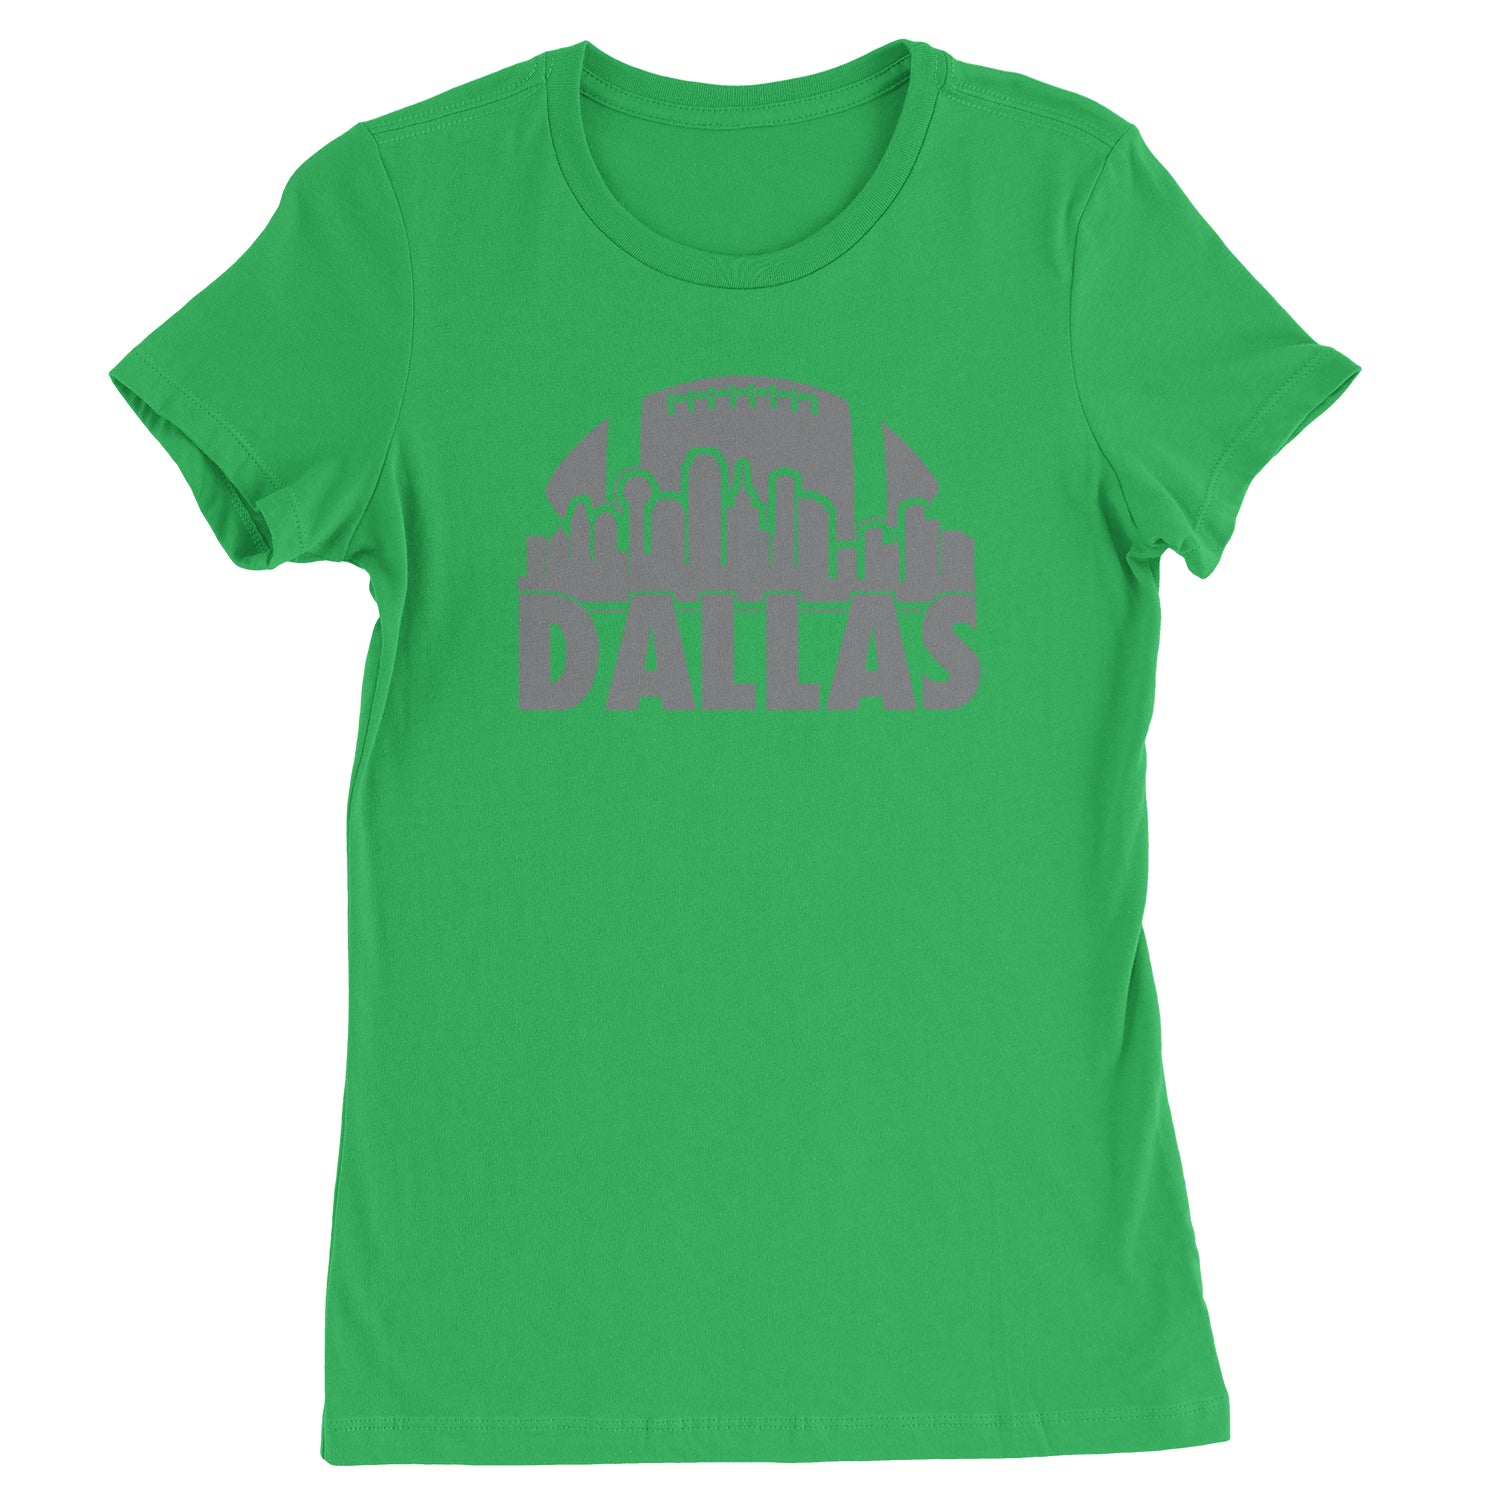 Dallas Texas Skyline Womens T-shirt dallas, Texas by Expression Tees